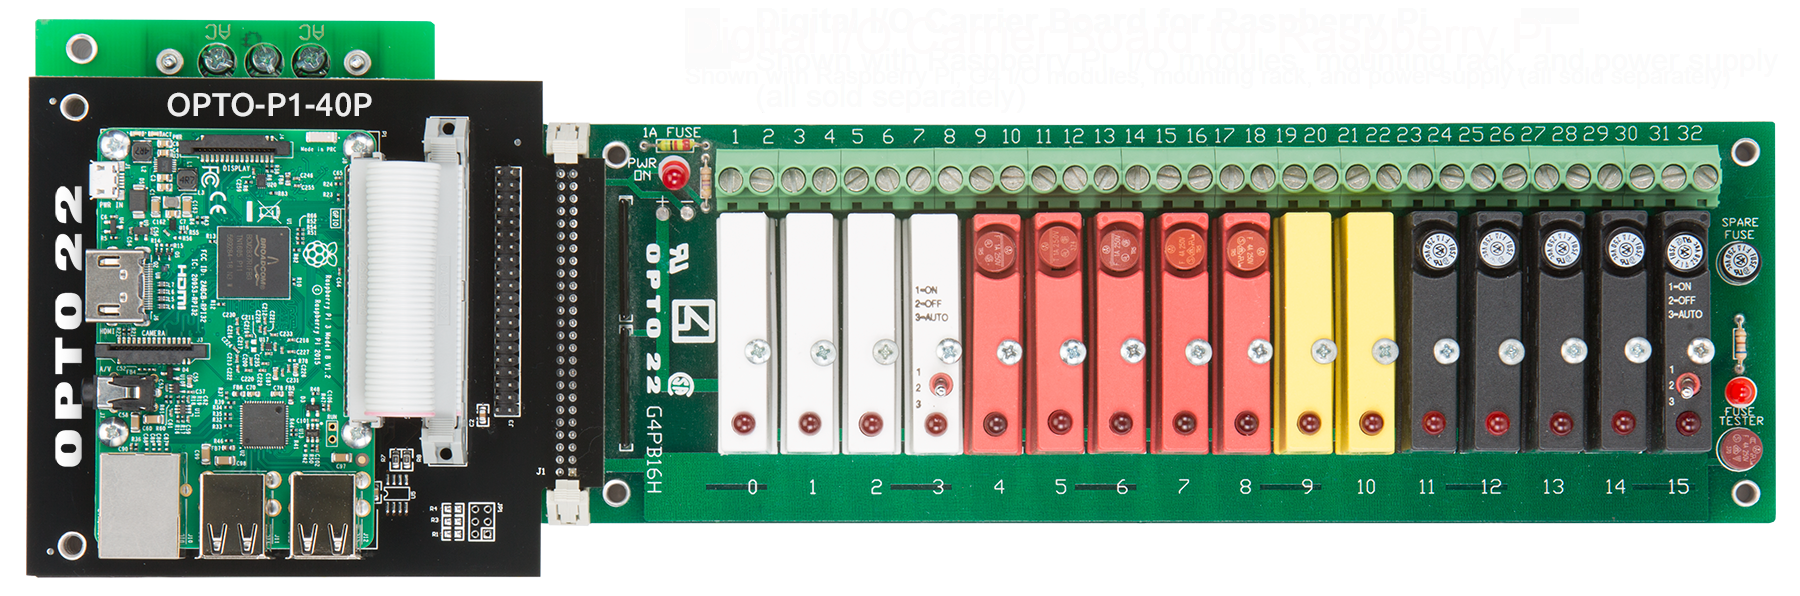 Digital I/O Carrier Board for Raspberry Pi